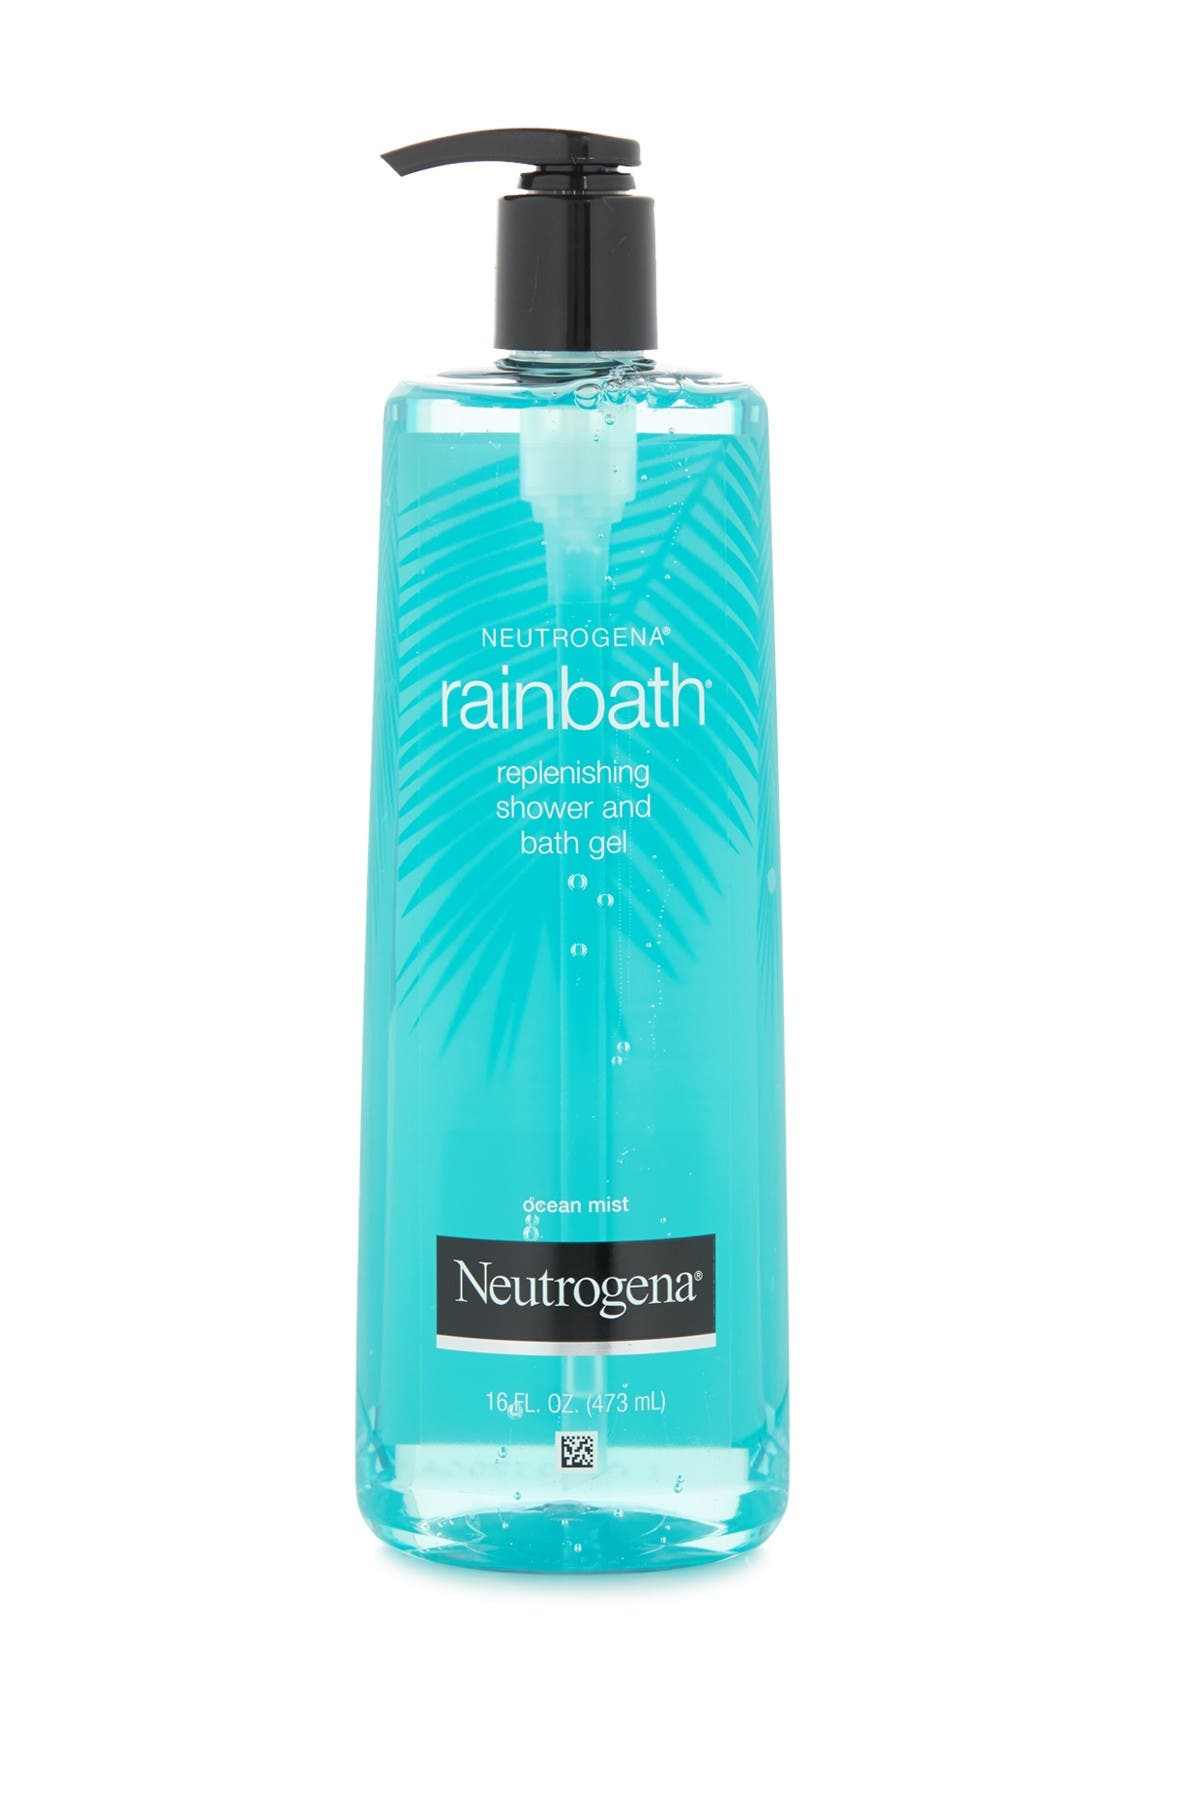 Rainbath Replenishing Shower/Bath Gel, Ocean Mist - 16 oz. Neutrogena